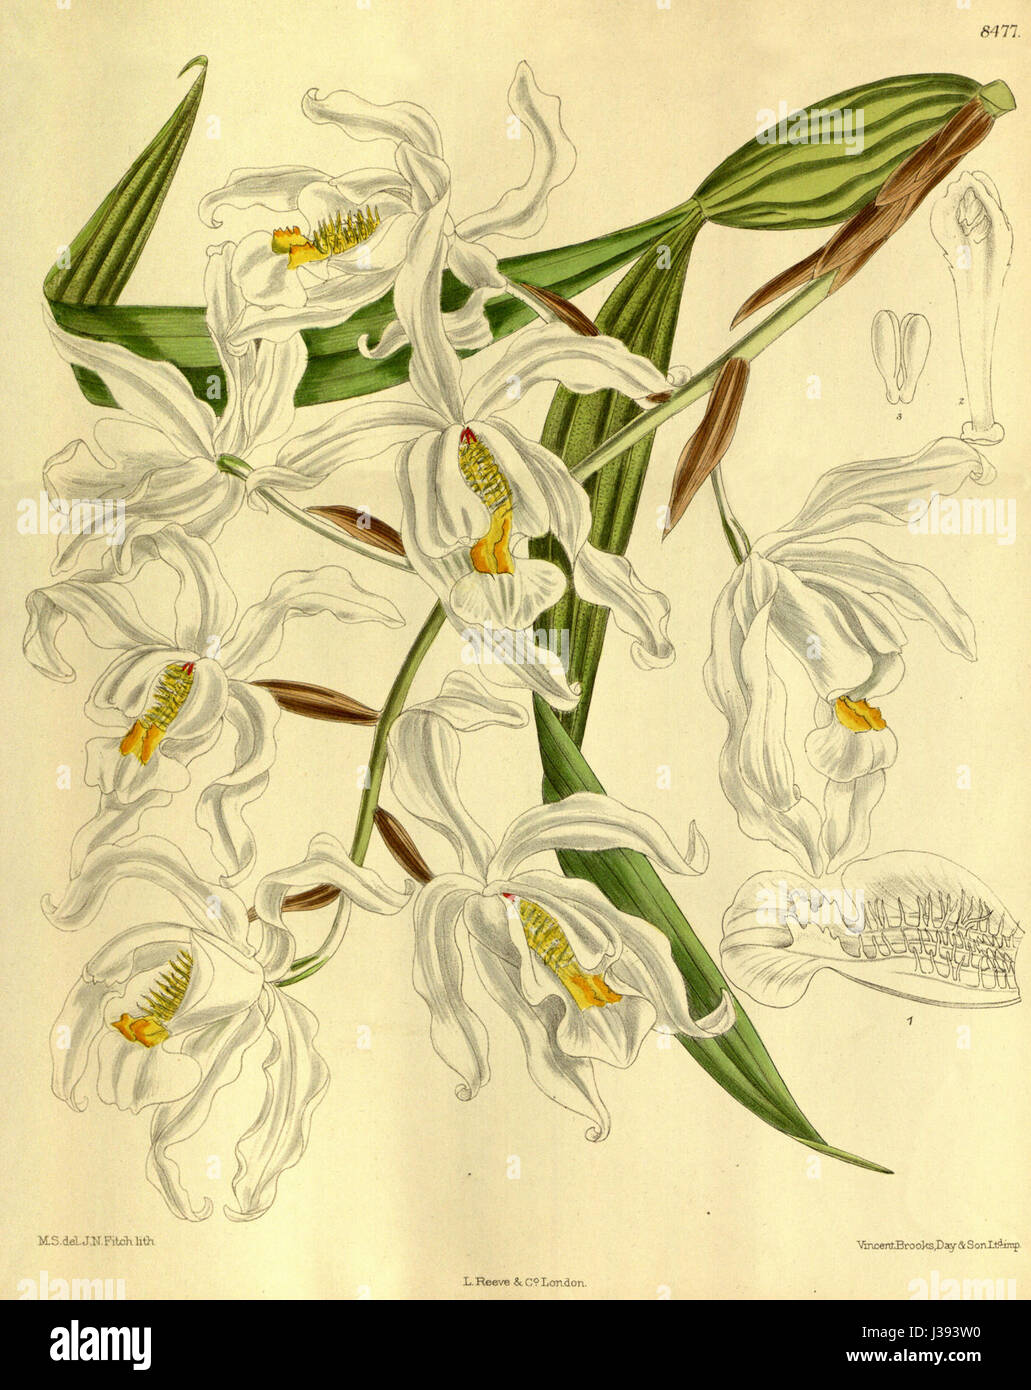 Coelogyne cristata   Curtis' 139 (Ser. 4 no. 9) pl. 8477 (1913) Stock Photo